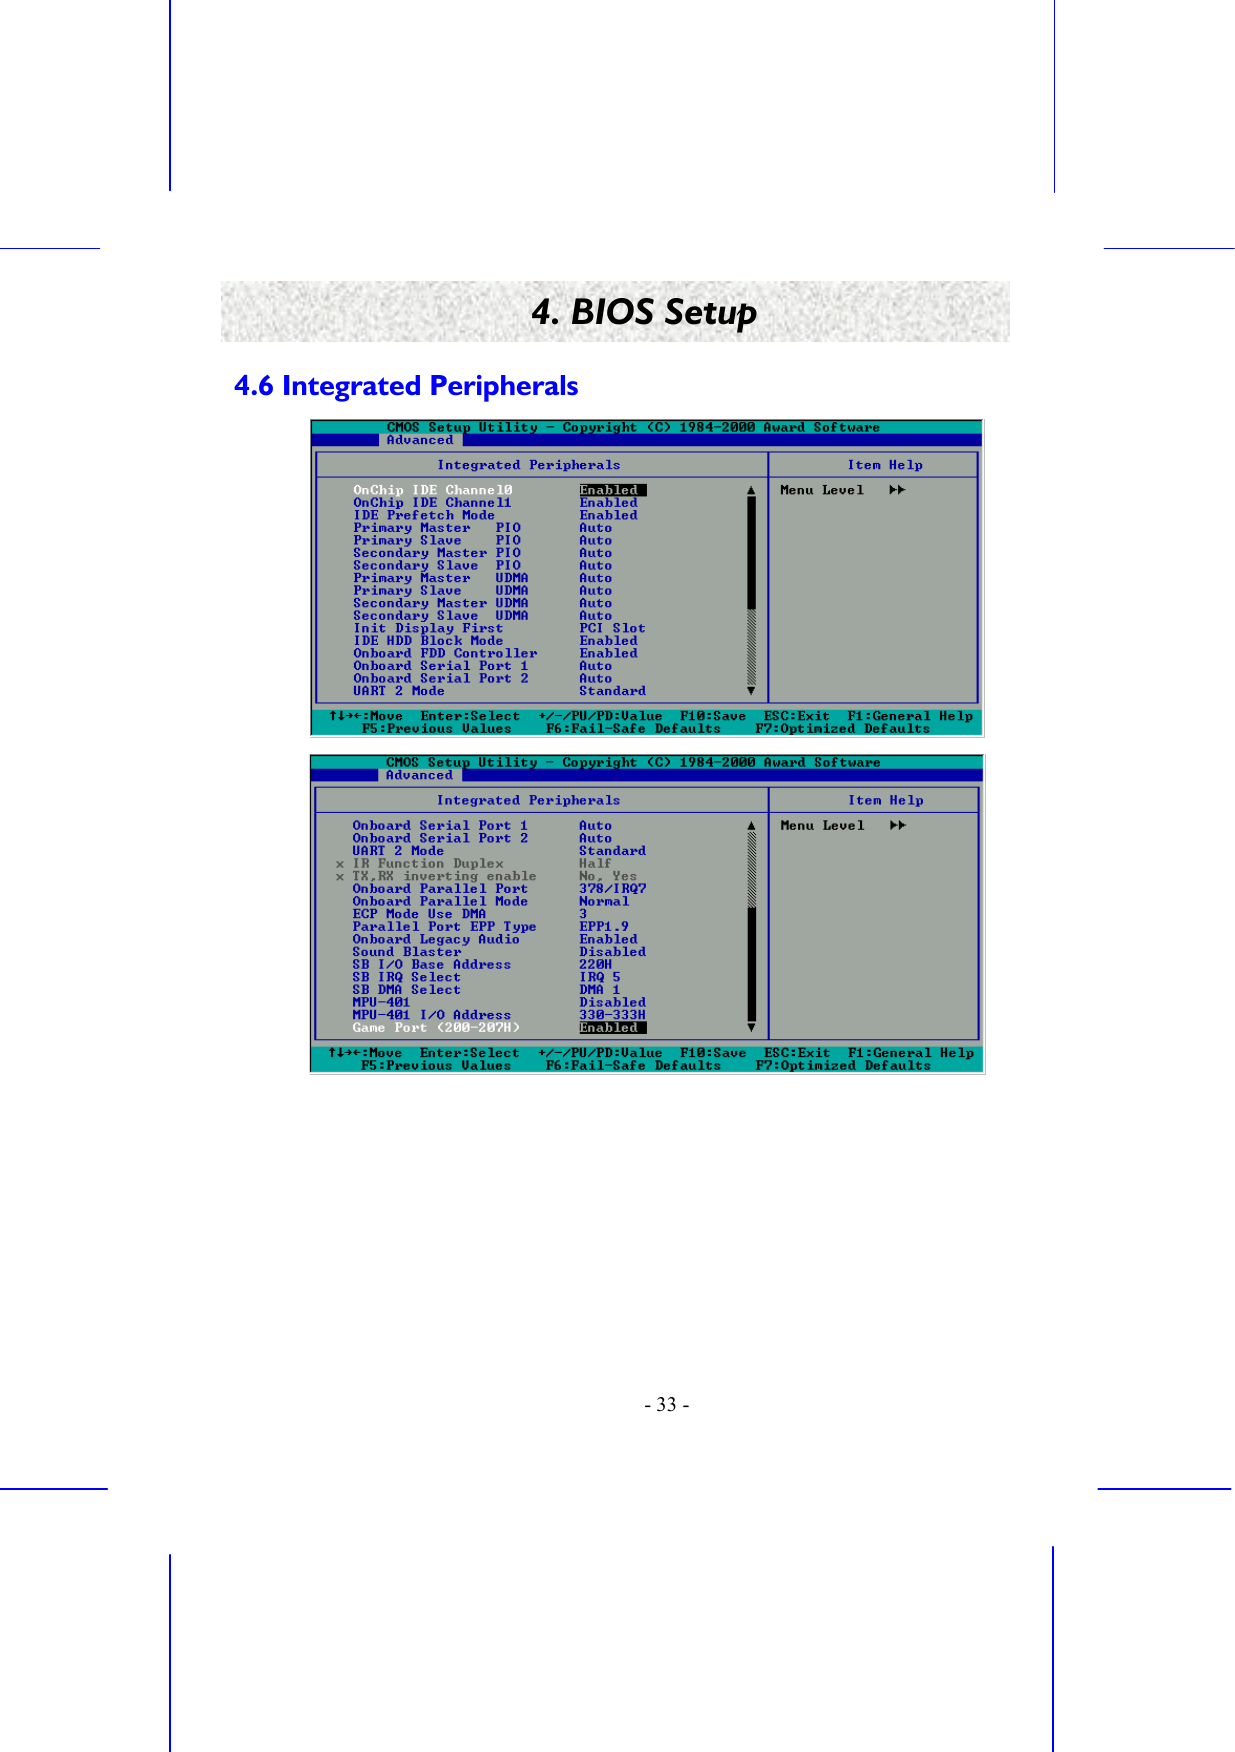    - 33 - 4. BIOS Setup 4.6 Integrated Peripherals   